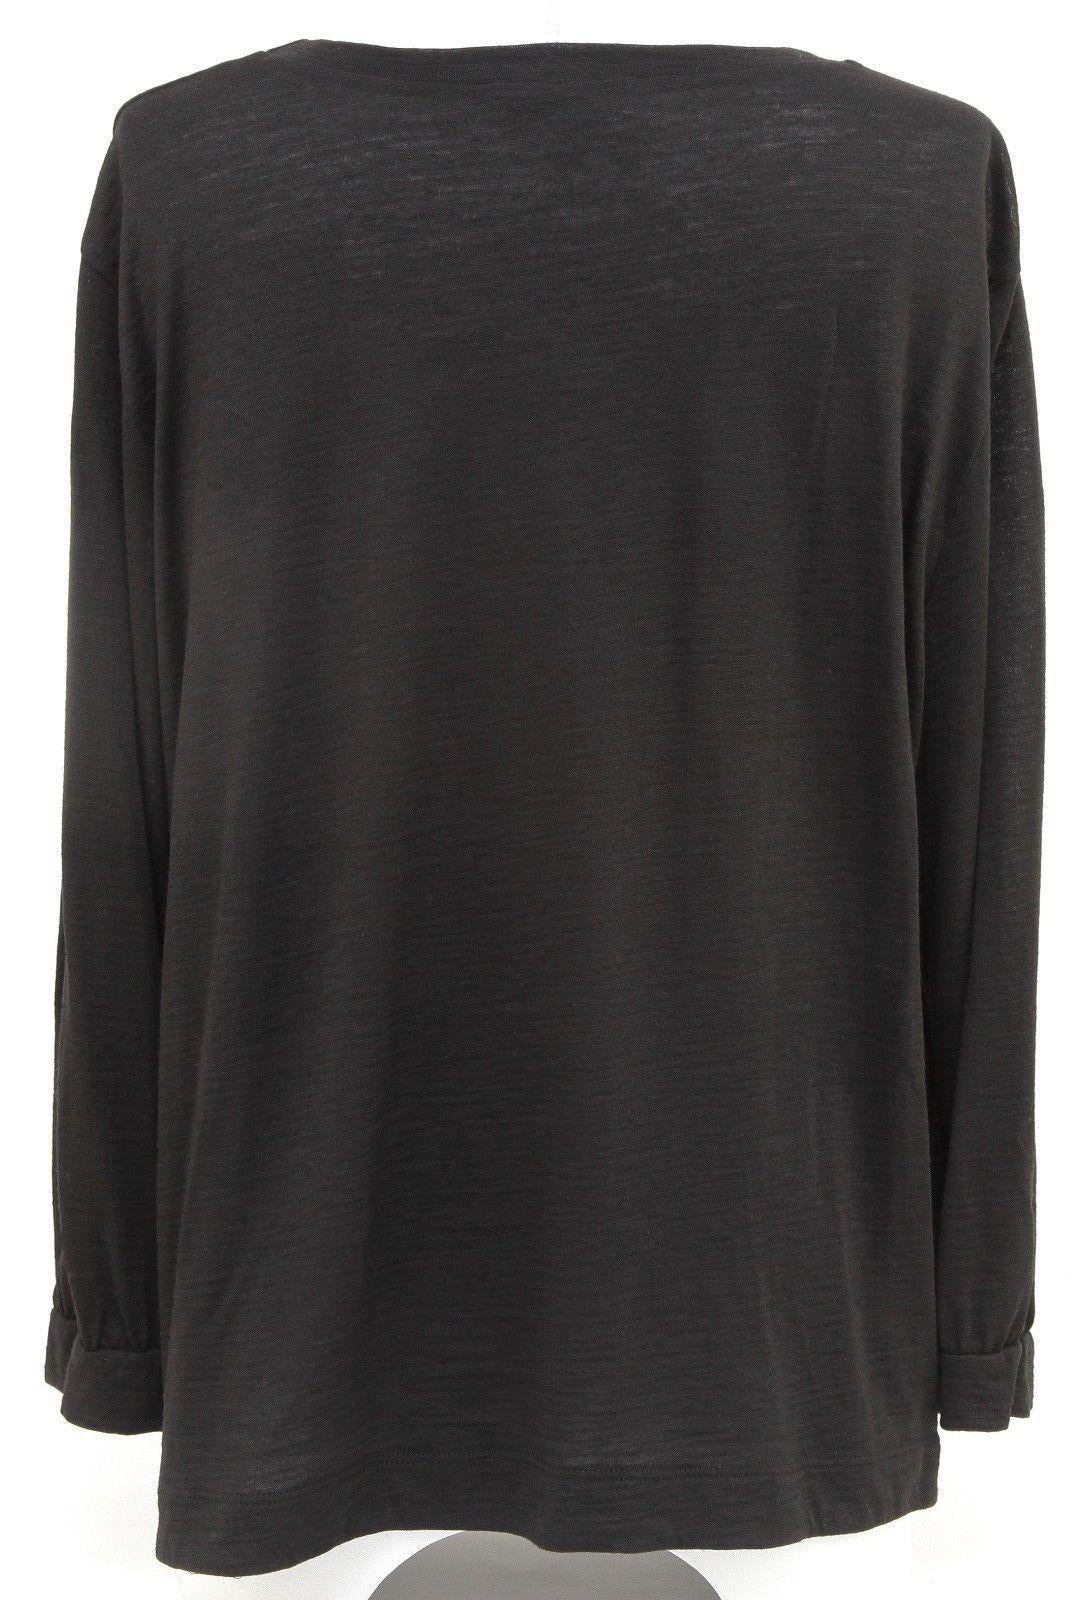 See By Chloe Sweater Knit Top Black 3/4 Length Sleeve Scoop Neck Sz F 42 US 10 Pour femmes en vente